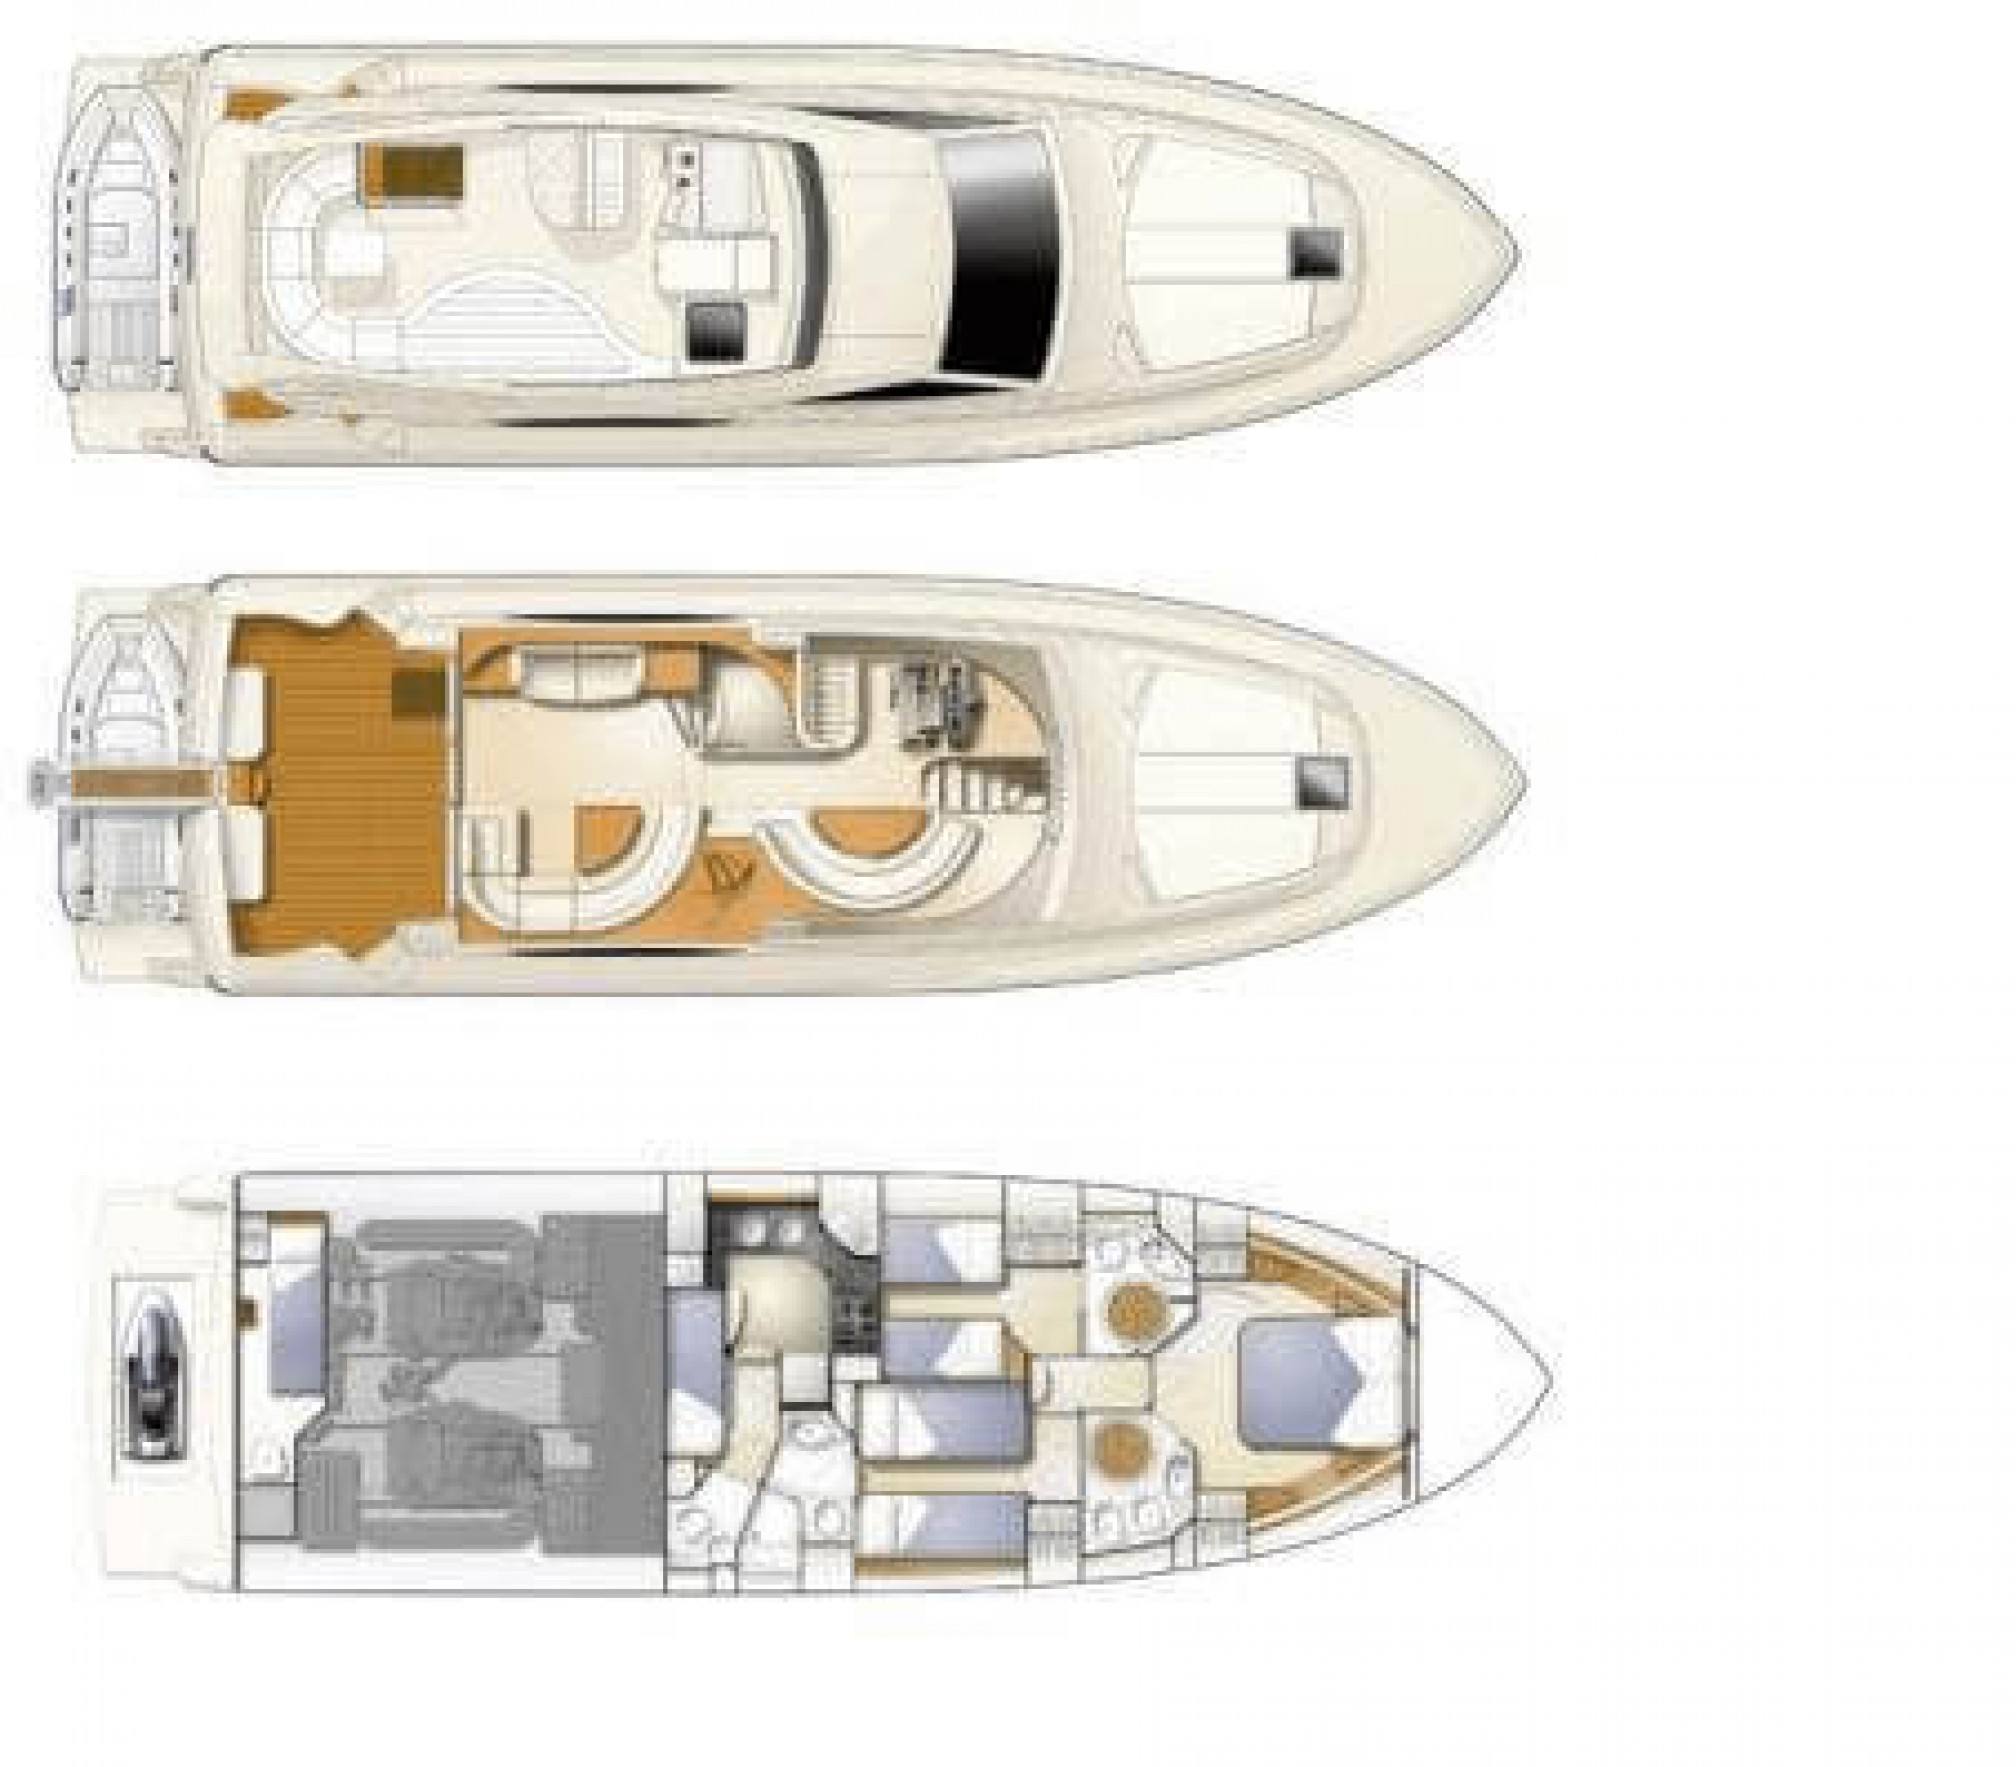 Ferretti 550 Fly yacht charter layout